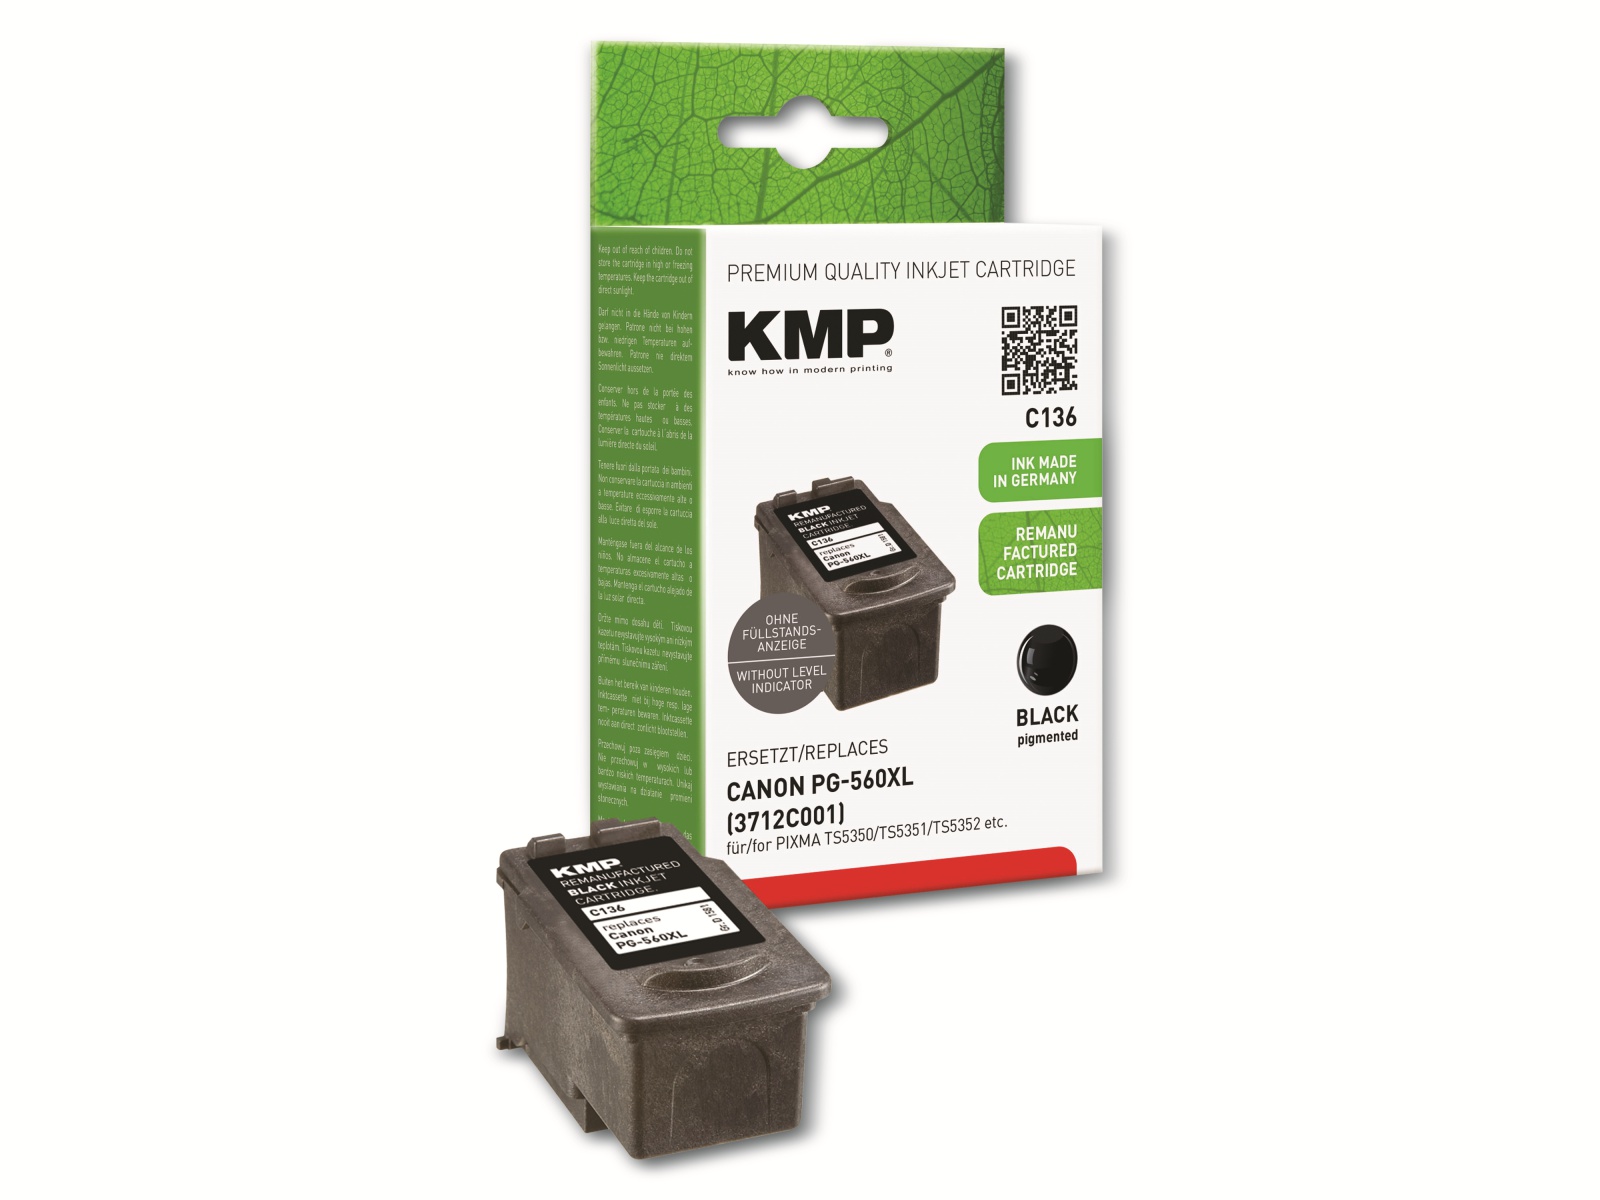 KMP Tintenpatrone C136, schwarz, für Canon Pixma